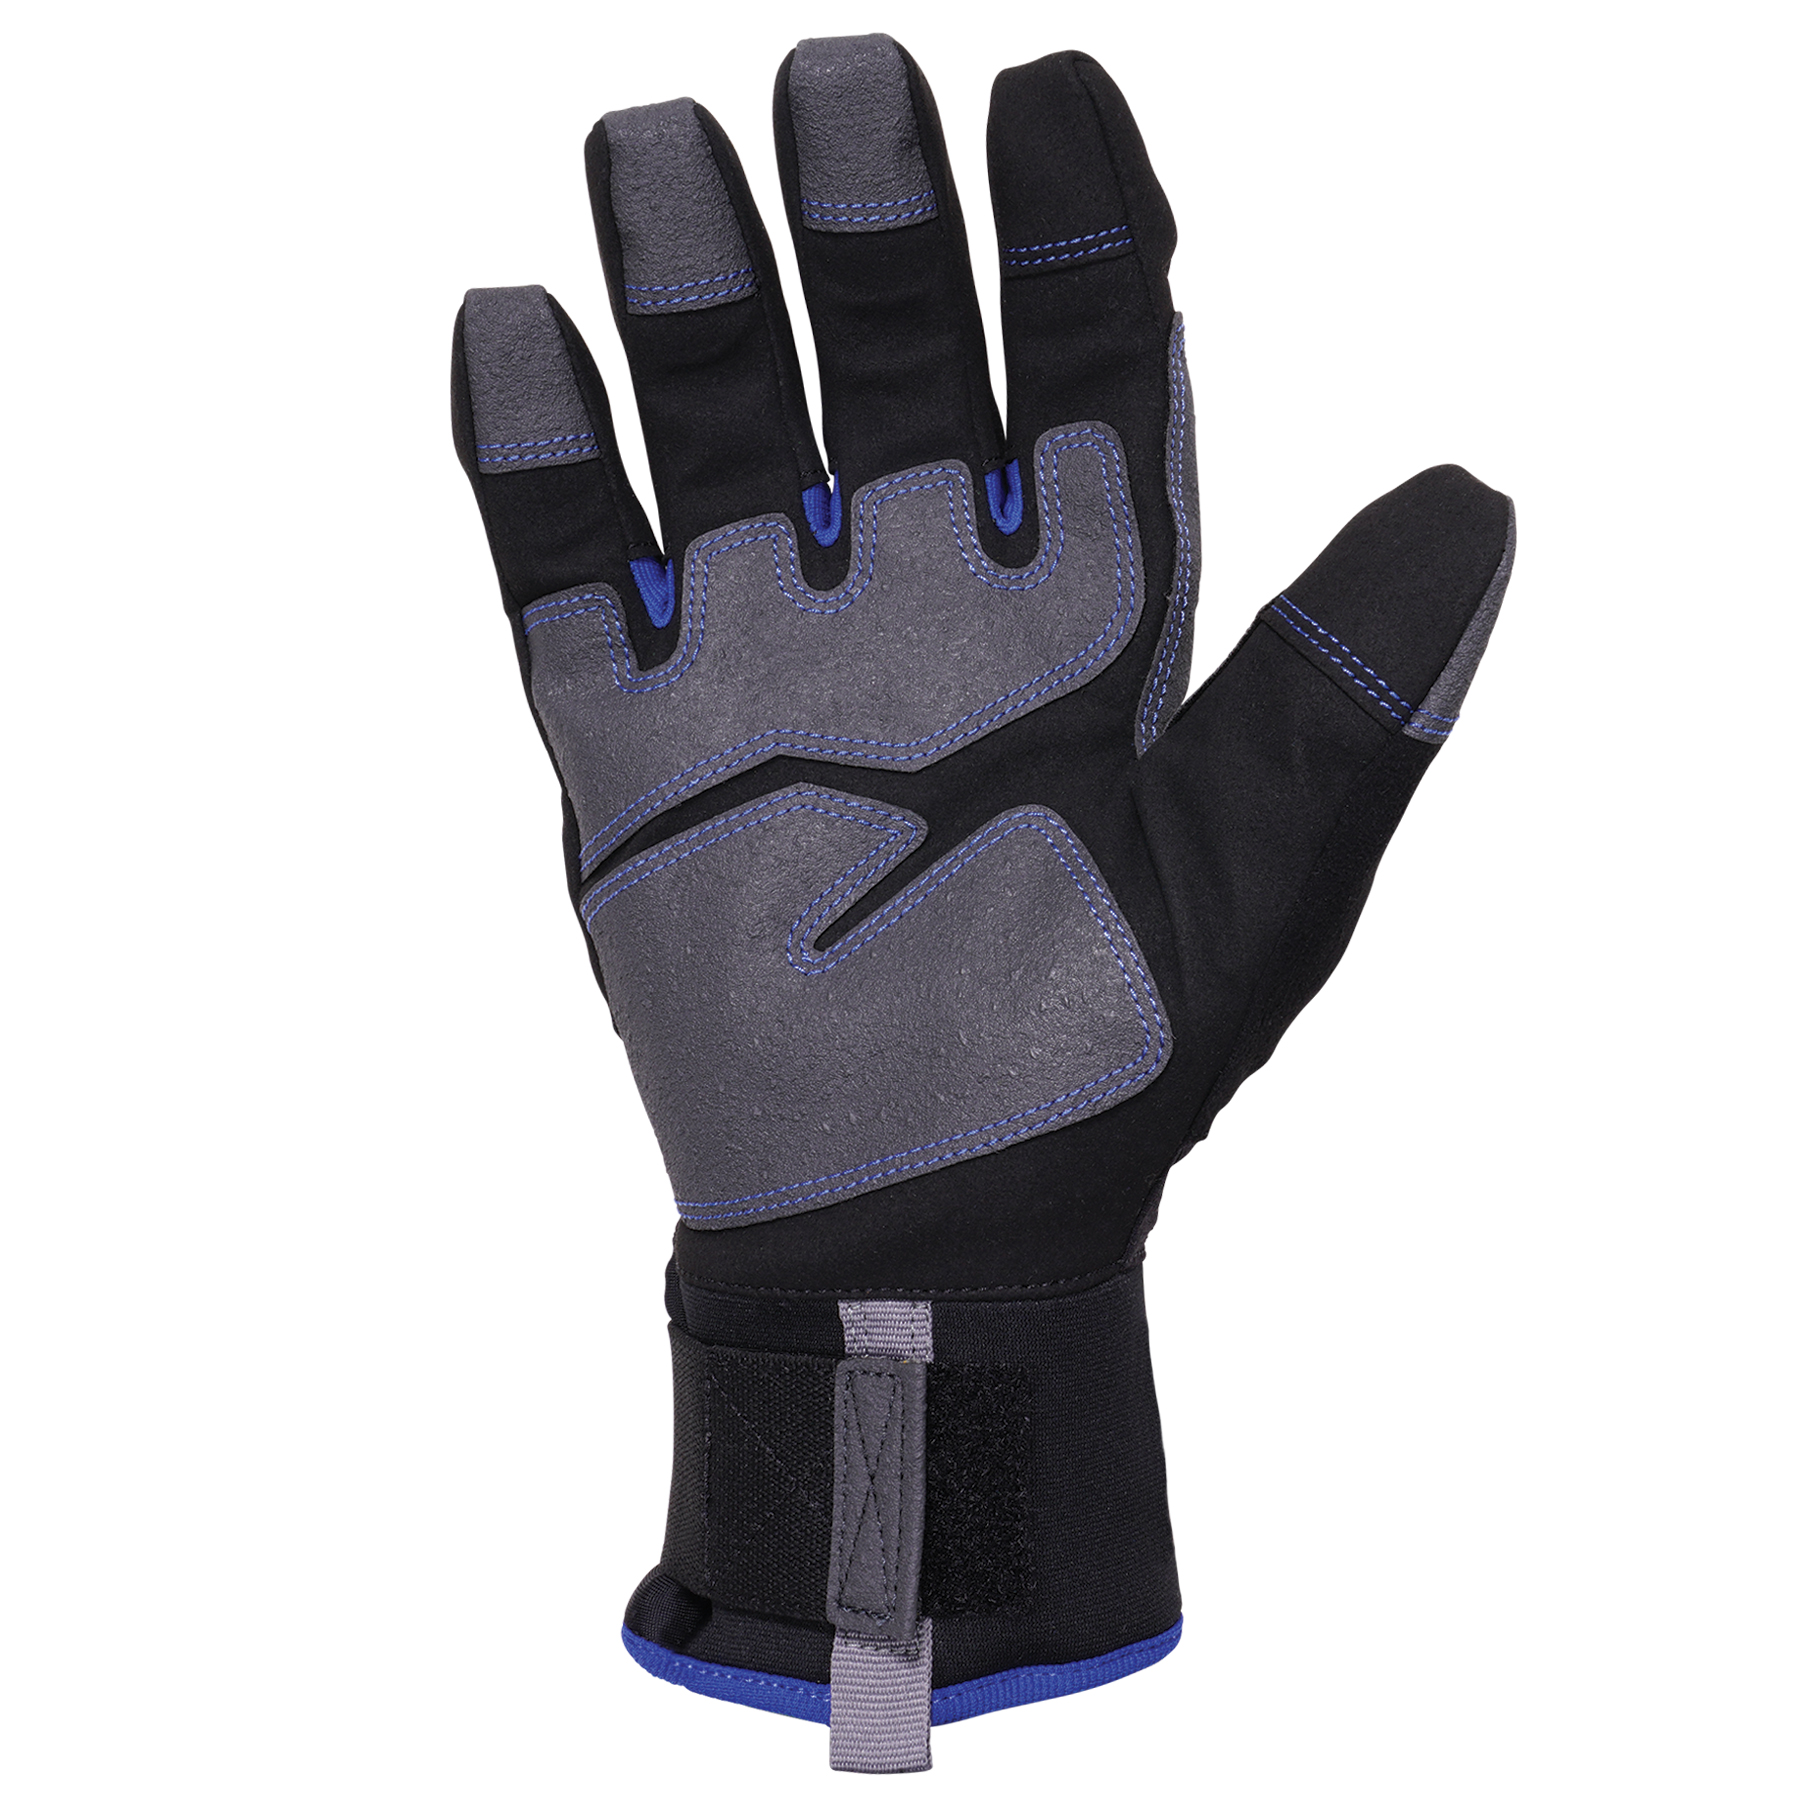 Gloves Reinforced Thermal | Ergodyne Utility